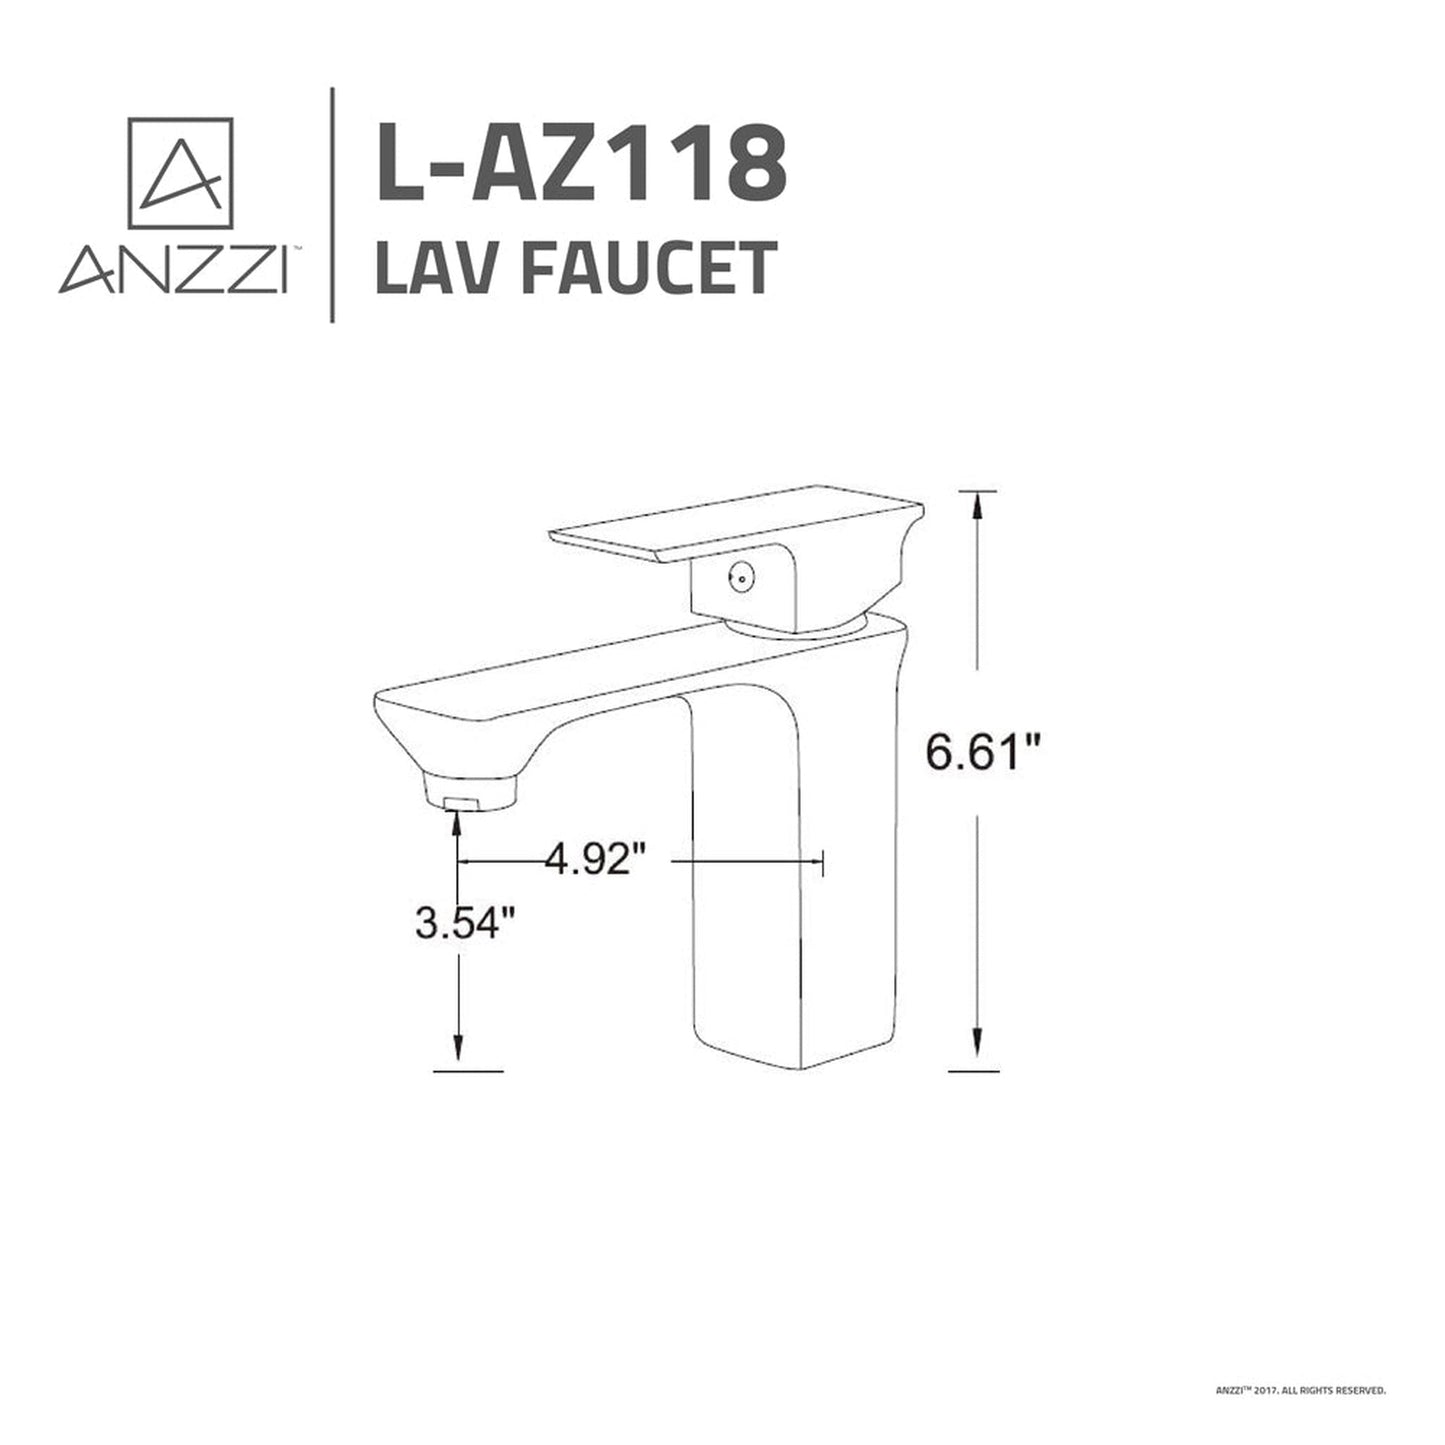 ANZZI Promenade Series 4" Single Hole Oil Rubbed Bronze Bathroom Sink Faucet